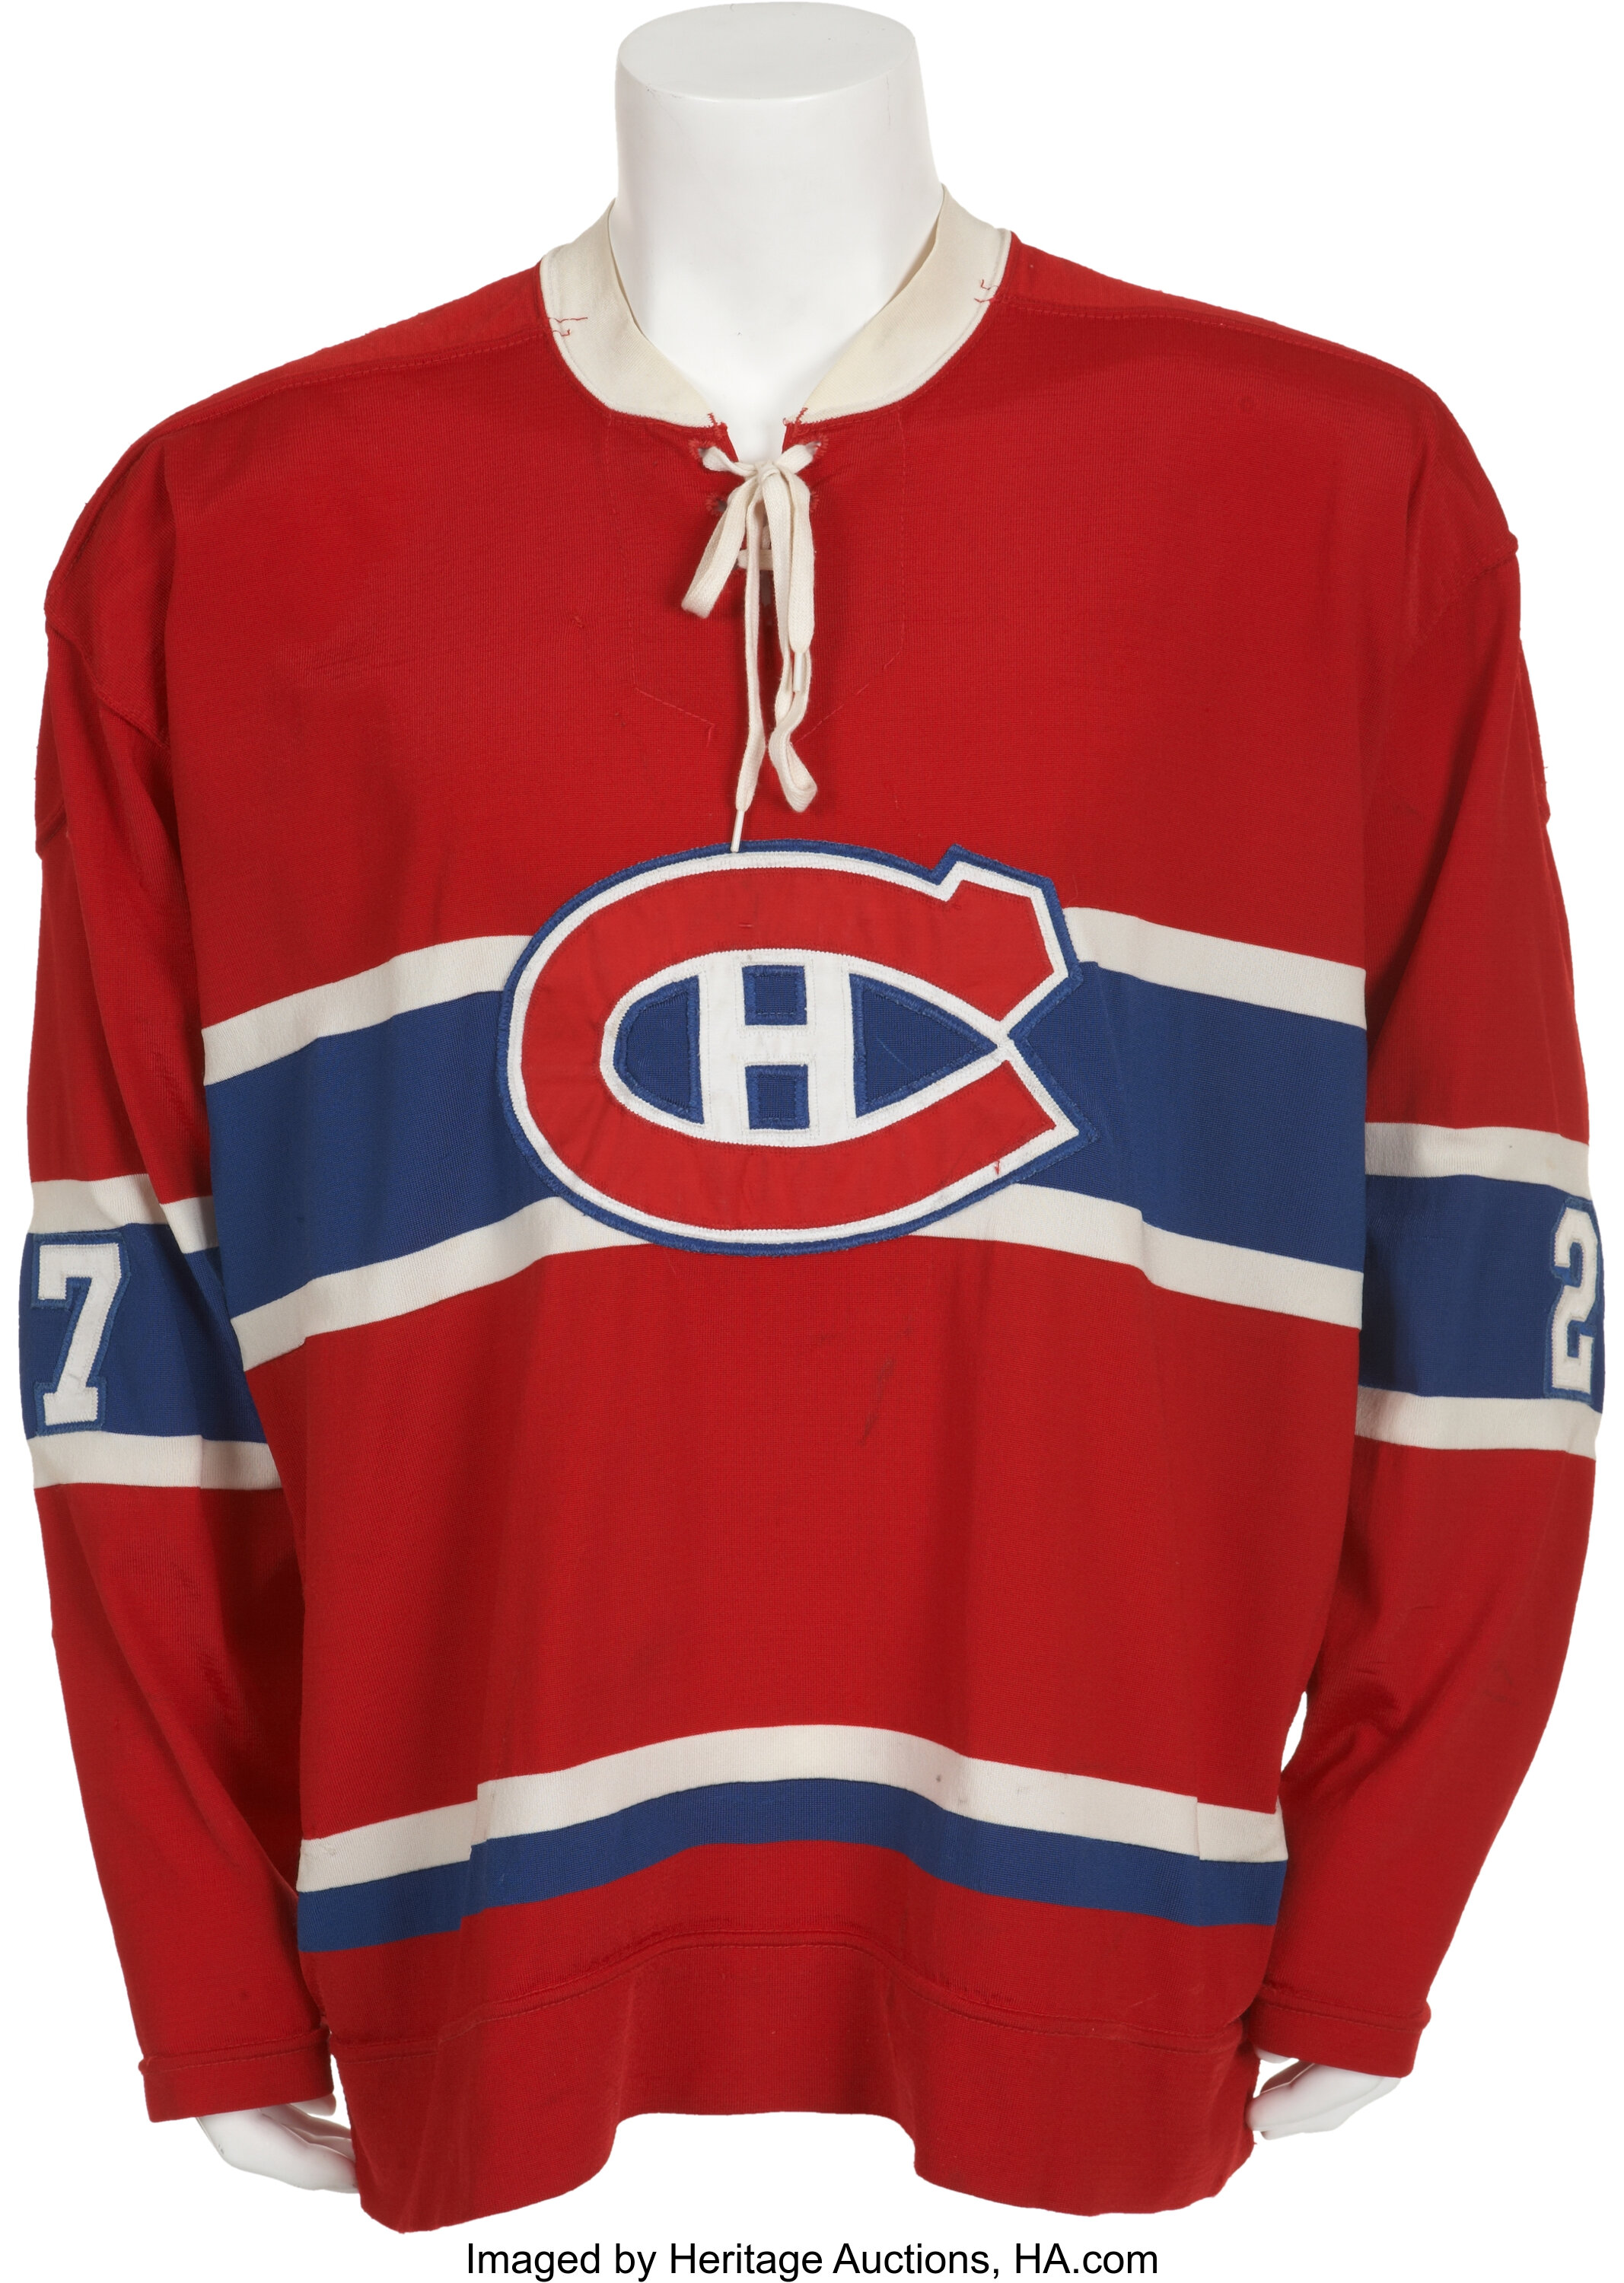 Montreal Voyageurs vintage hockey jersey